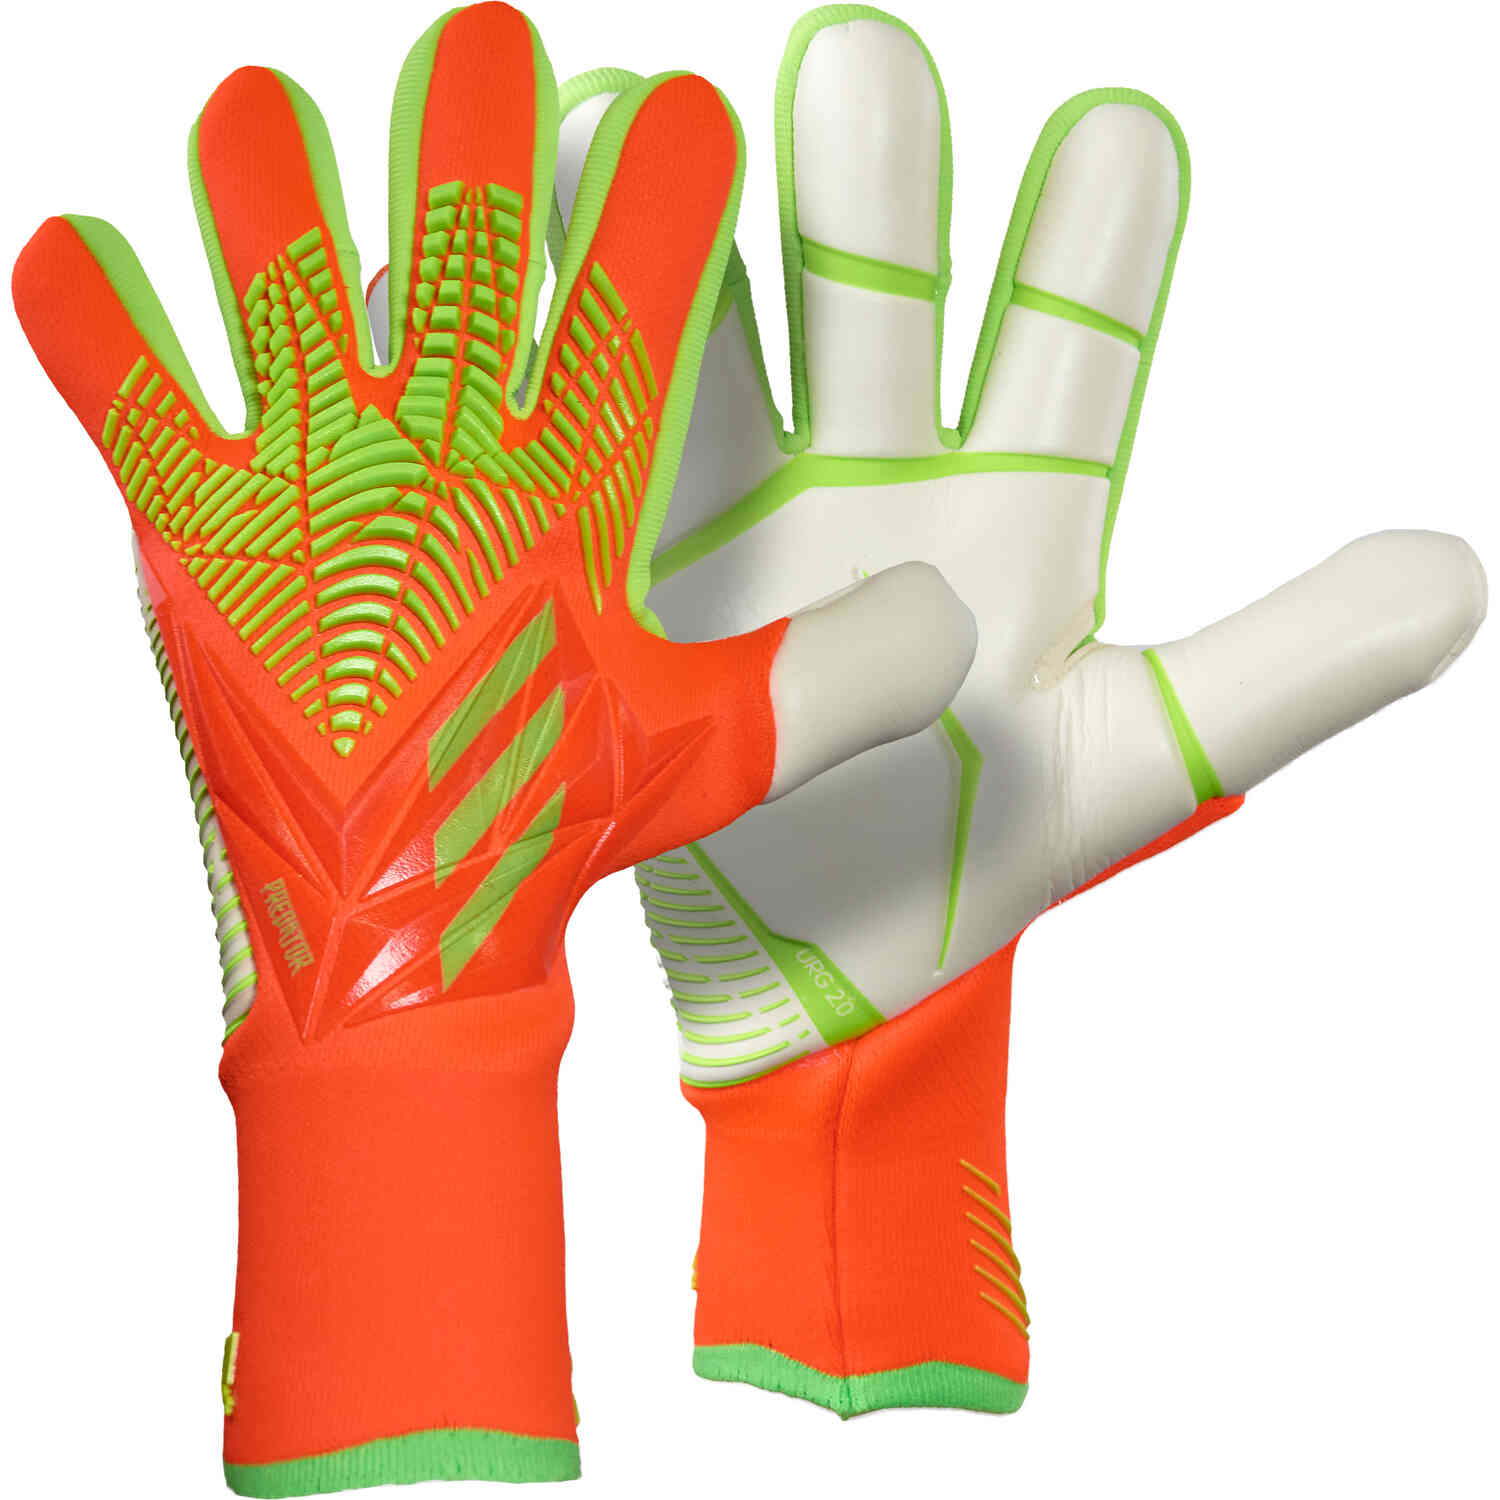 adidas Predator Pro Goalkeeper Gloves - Game Data Pack - SoccerPro